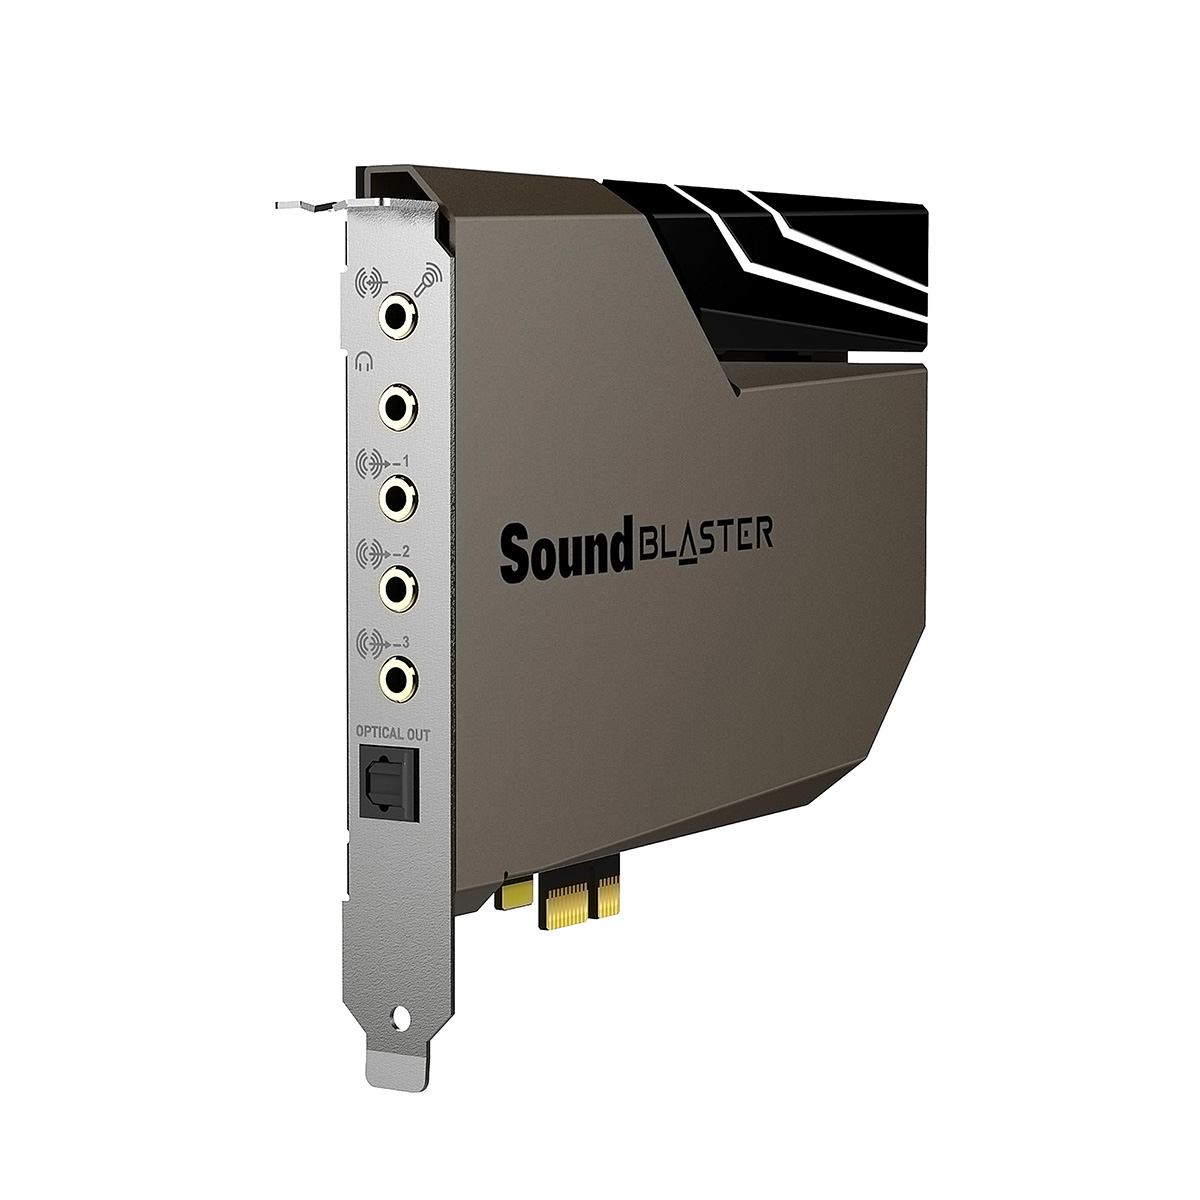 Creative - Creative Sound Blaster AE-7 Hi-res PCI-e DAC and Amp Sound Card with Xamp Discrete Headphone Bi-amp and Audio Control Module